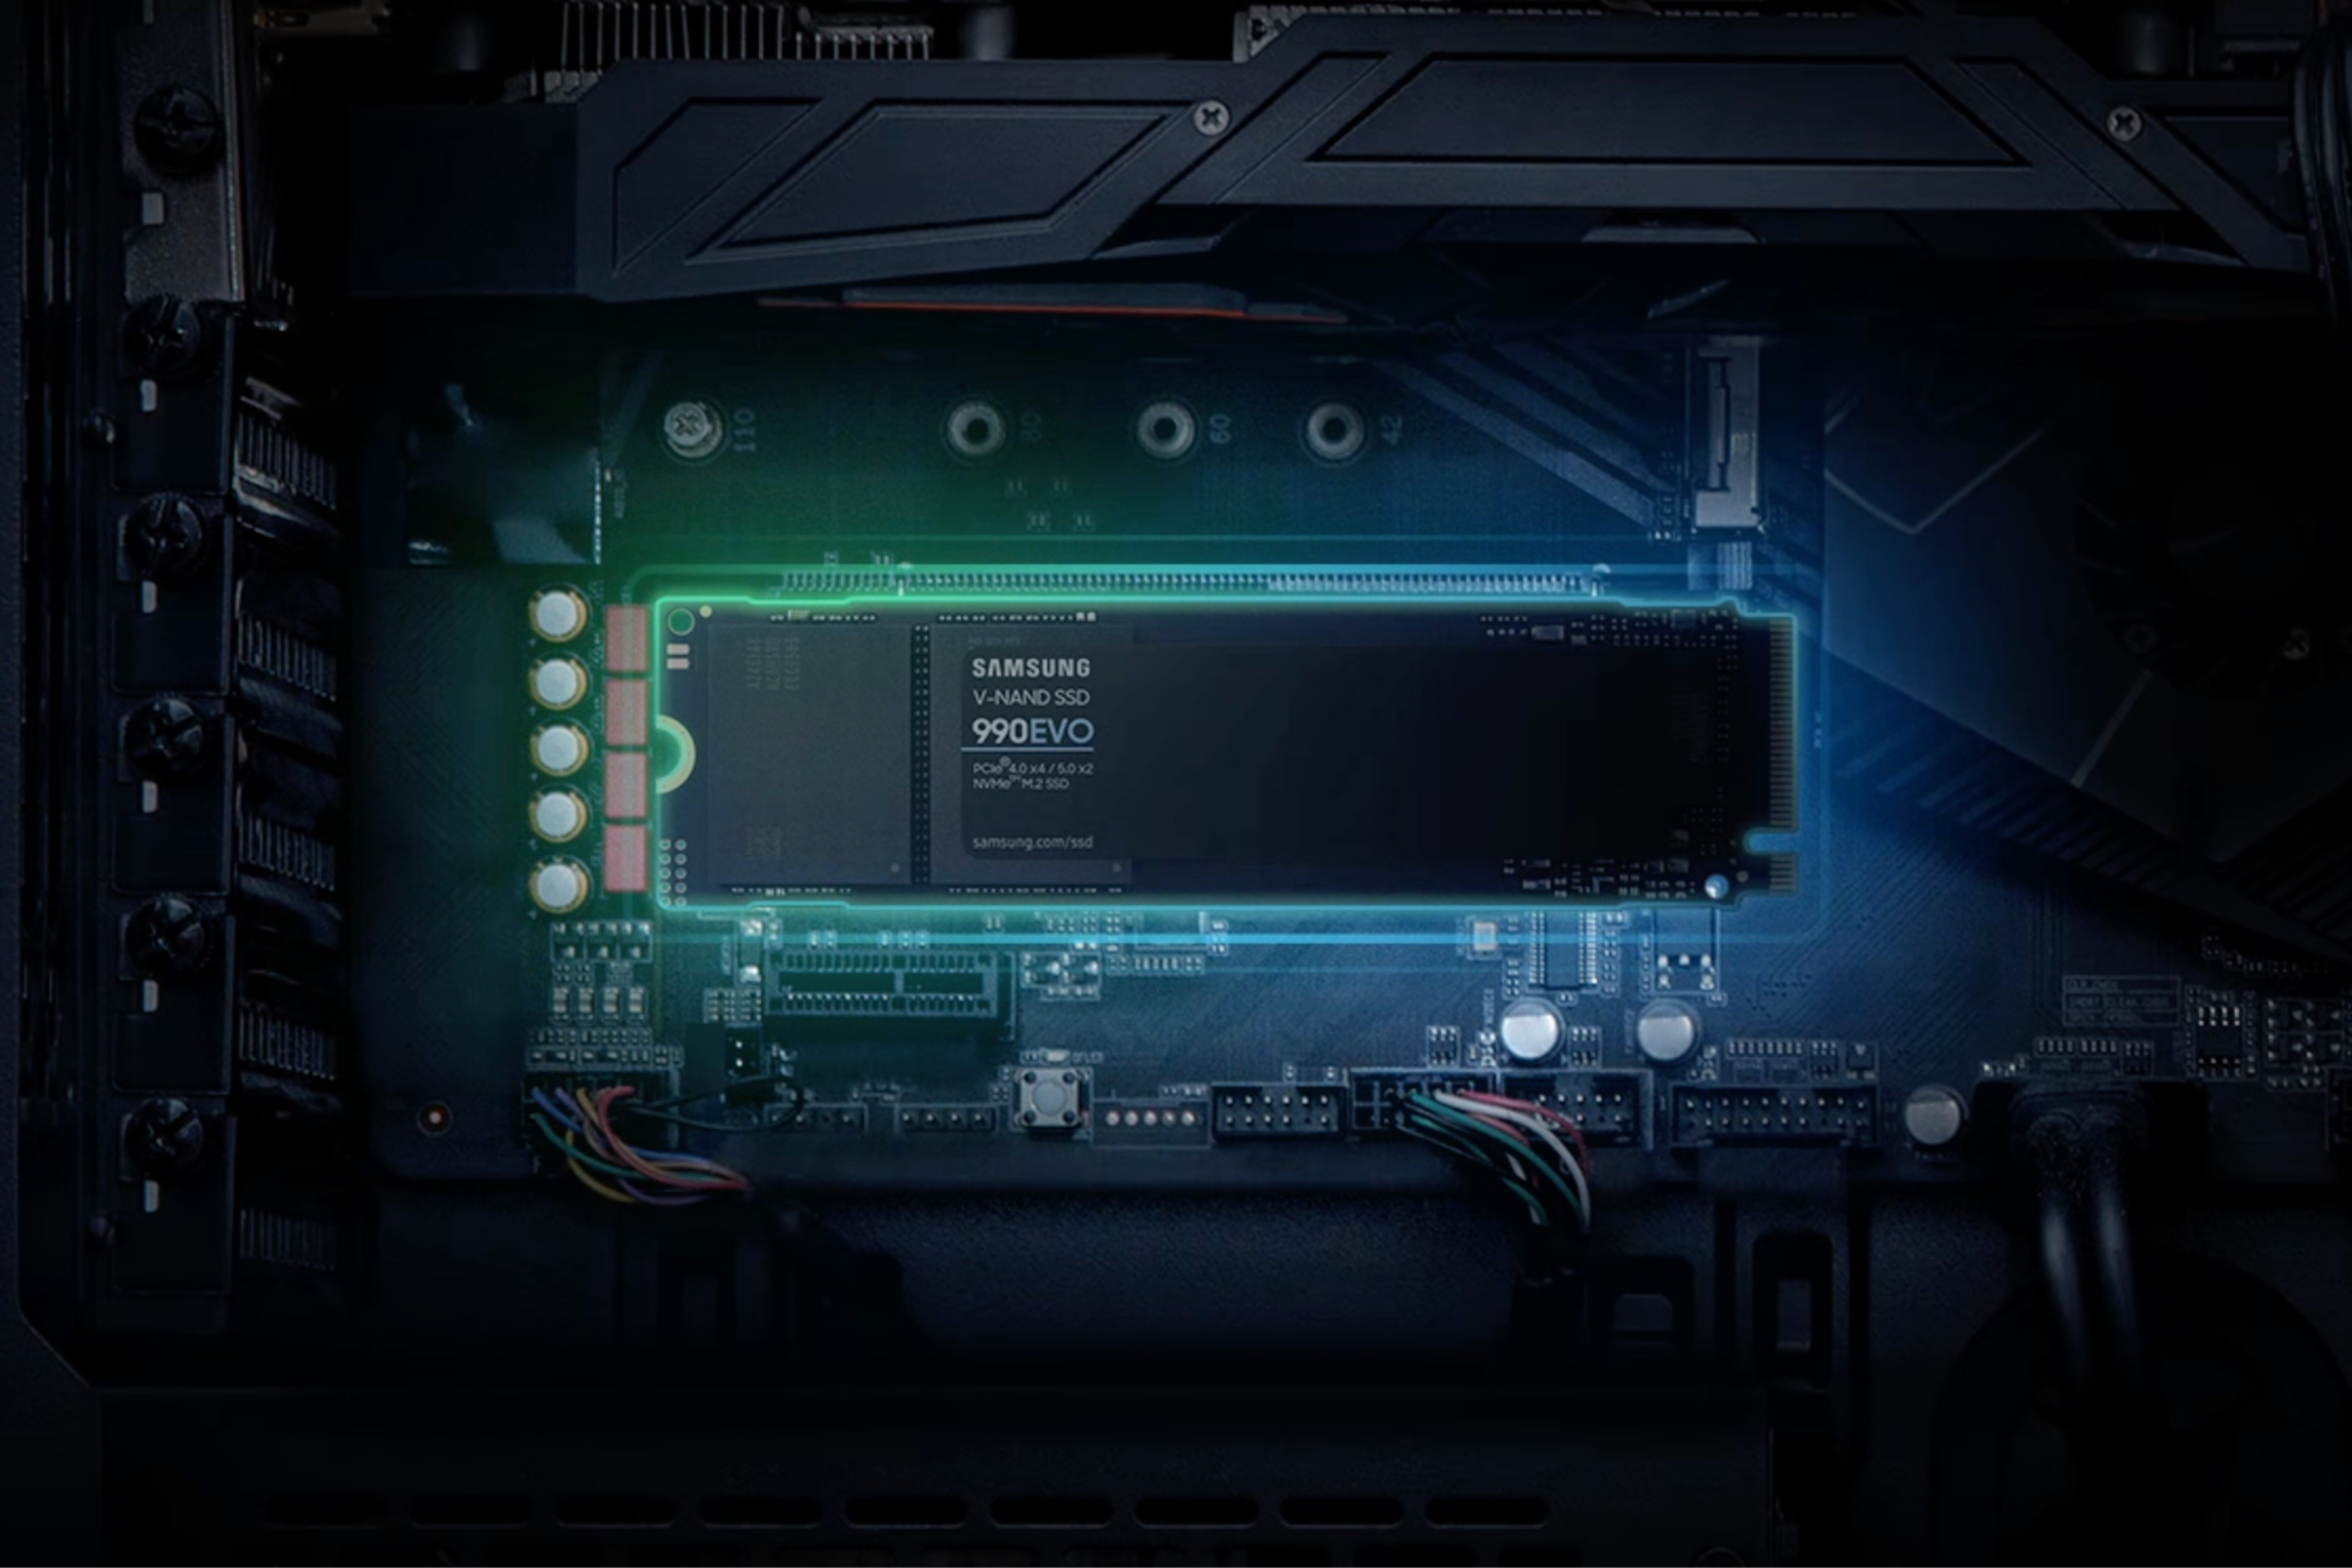 SAMSUNG 990 EVO SSD glowing on a motherboard